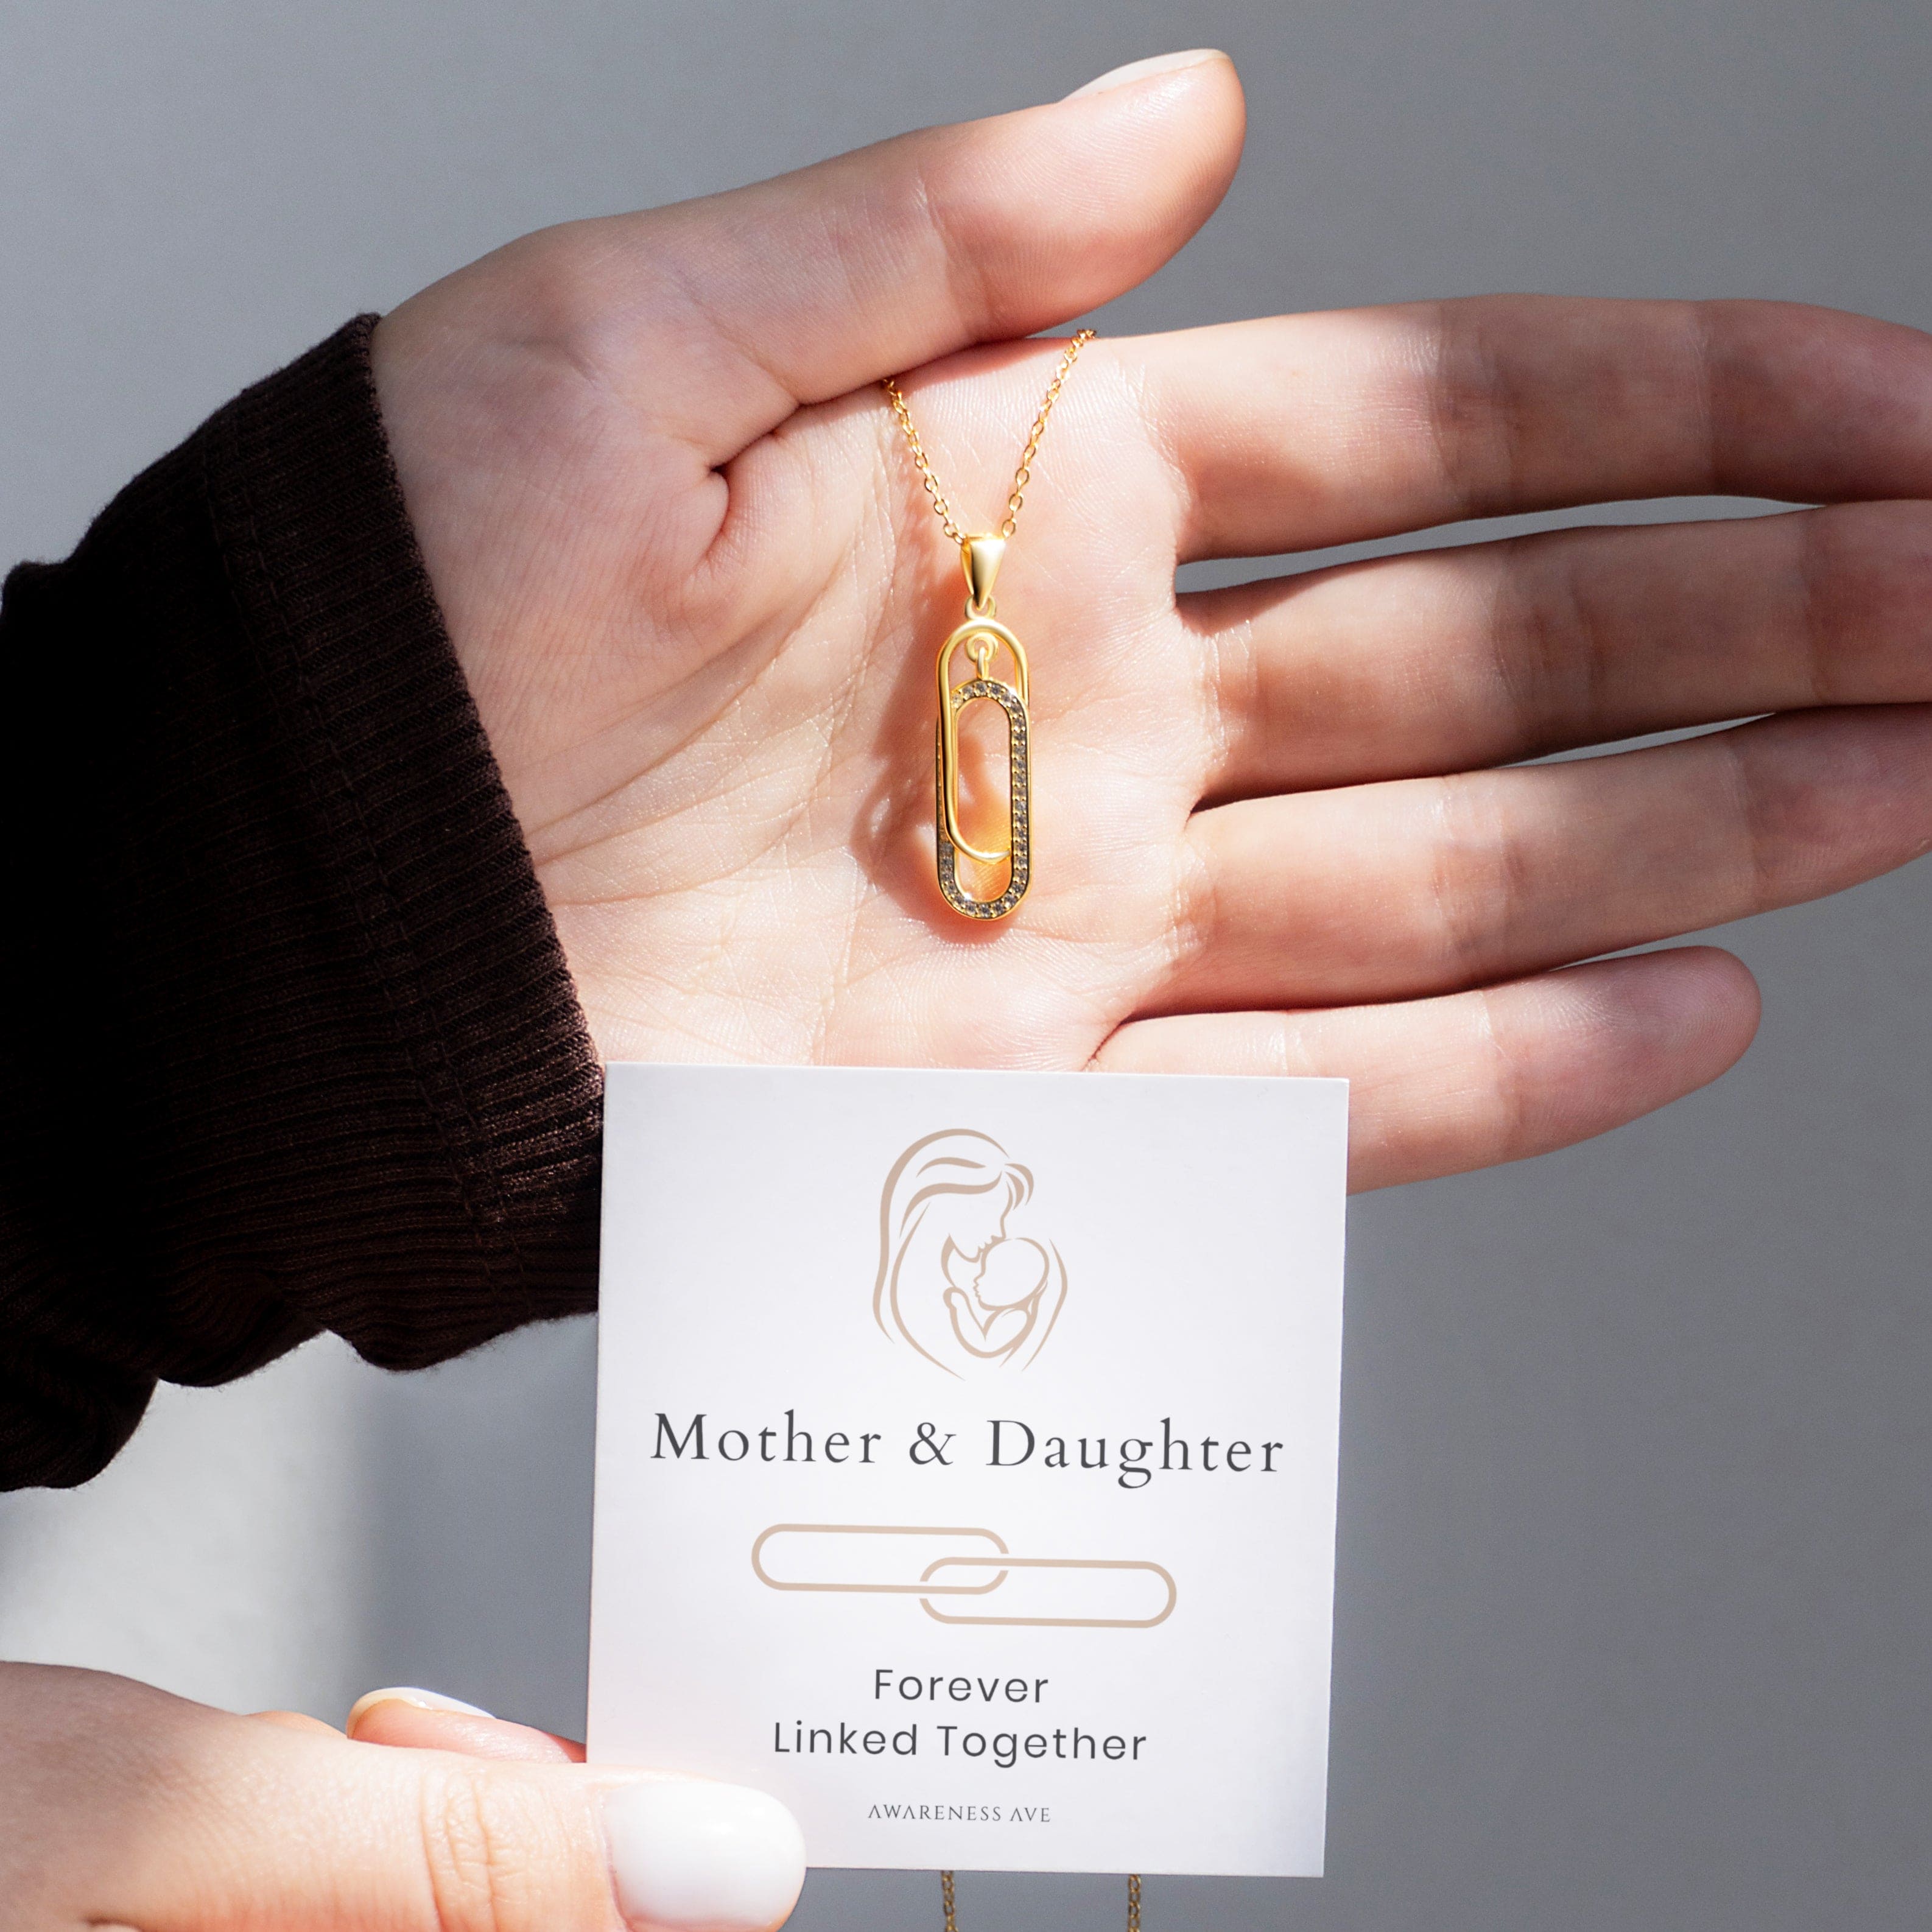 Mother & Daughter | Forever Linked Together | S925 Necklace